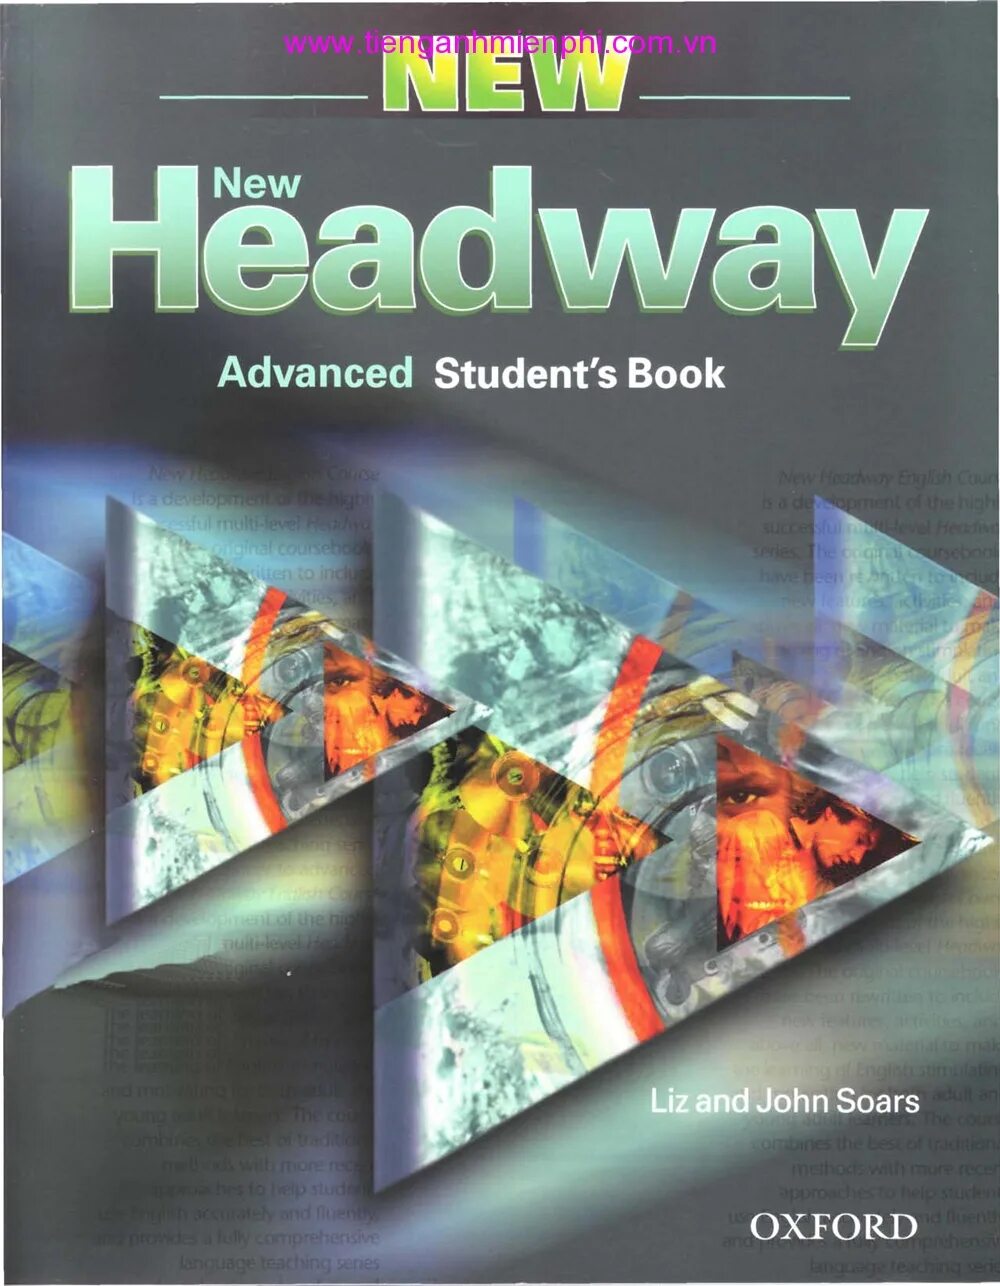 Английская книга Headway. New Headway English course student's book. Headway student's book книга. New headway advanced